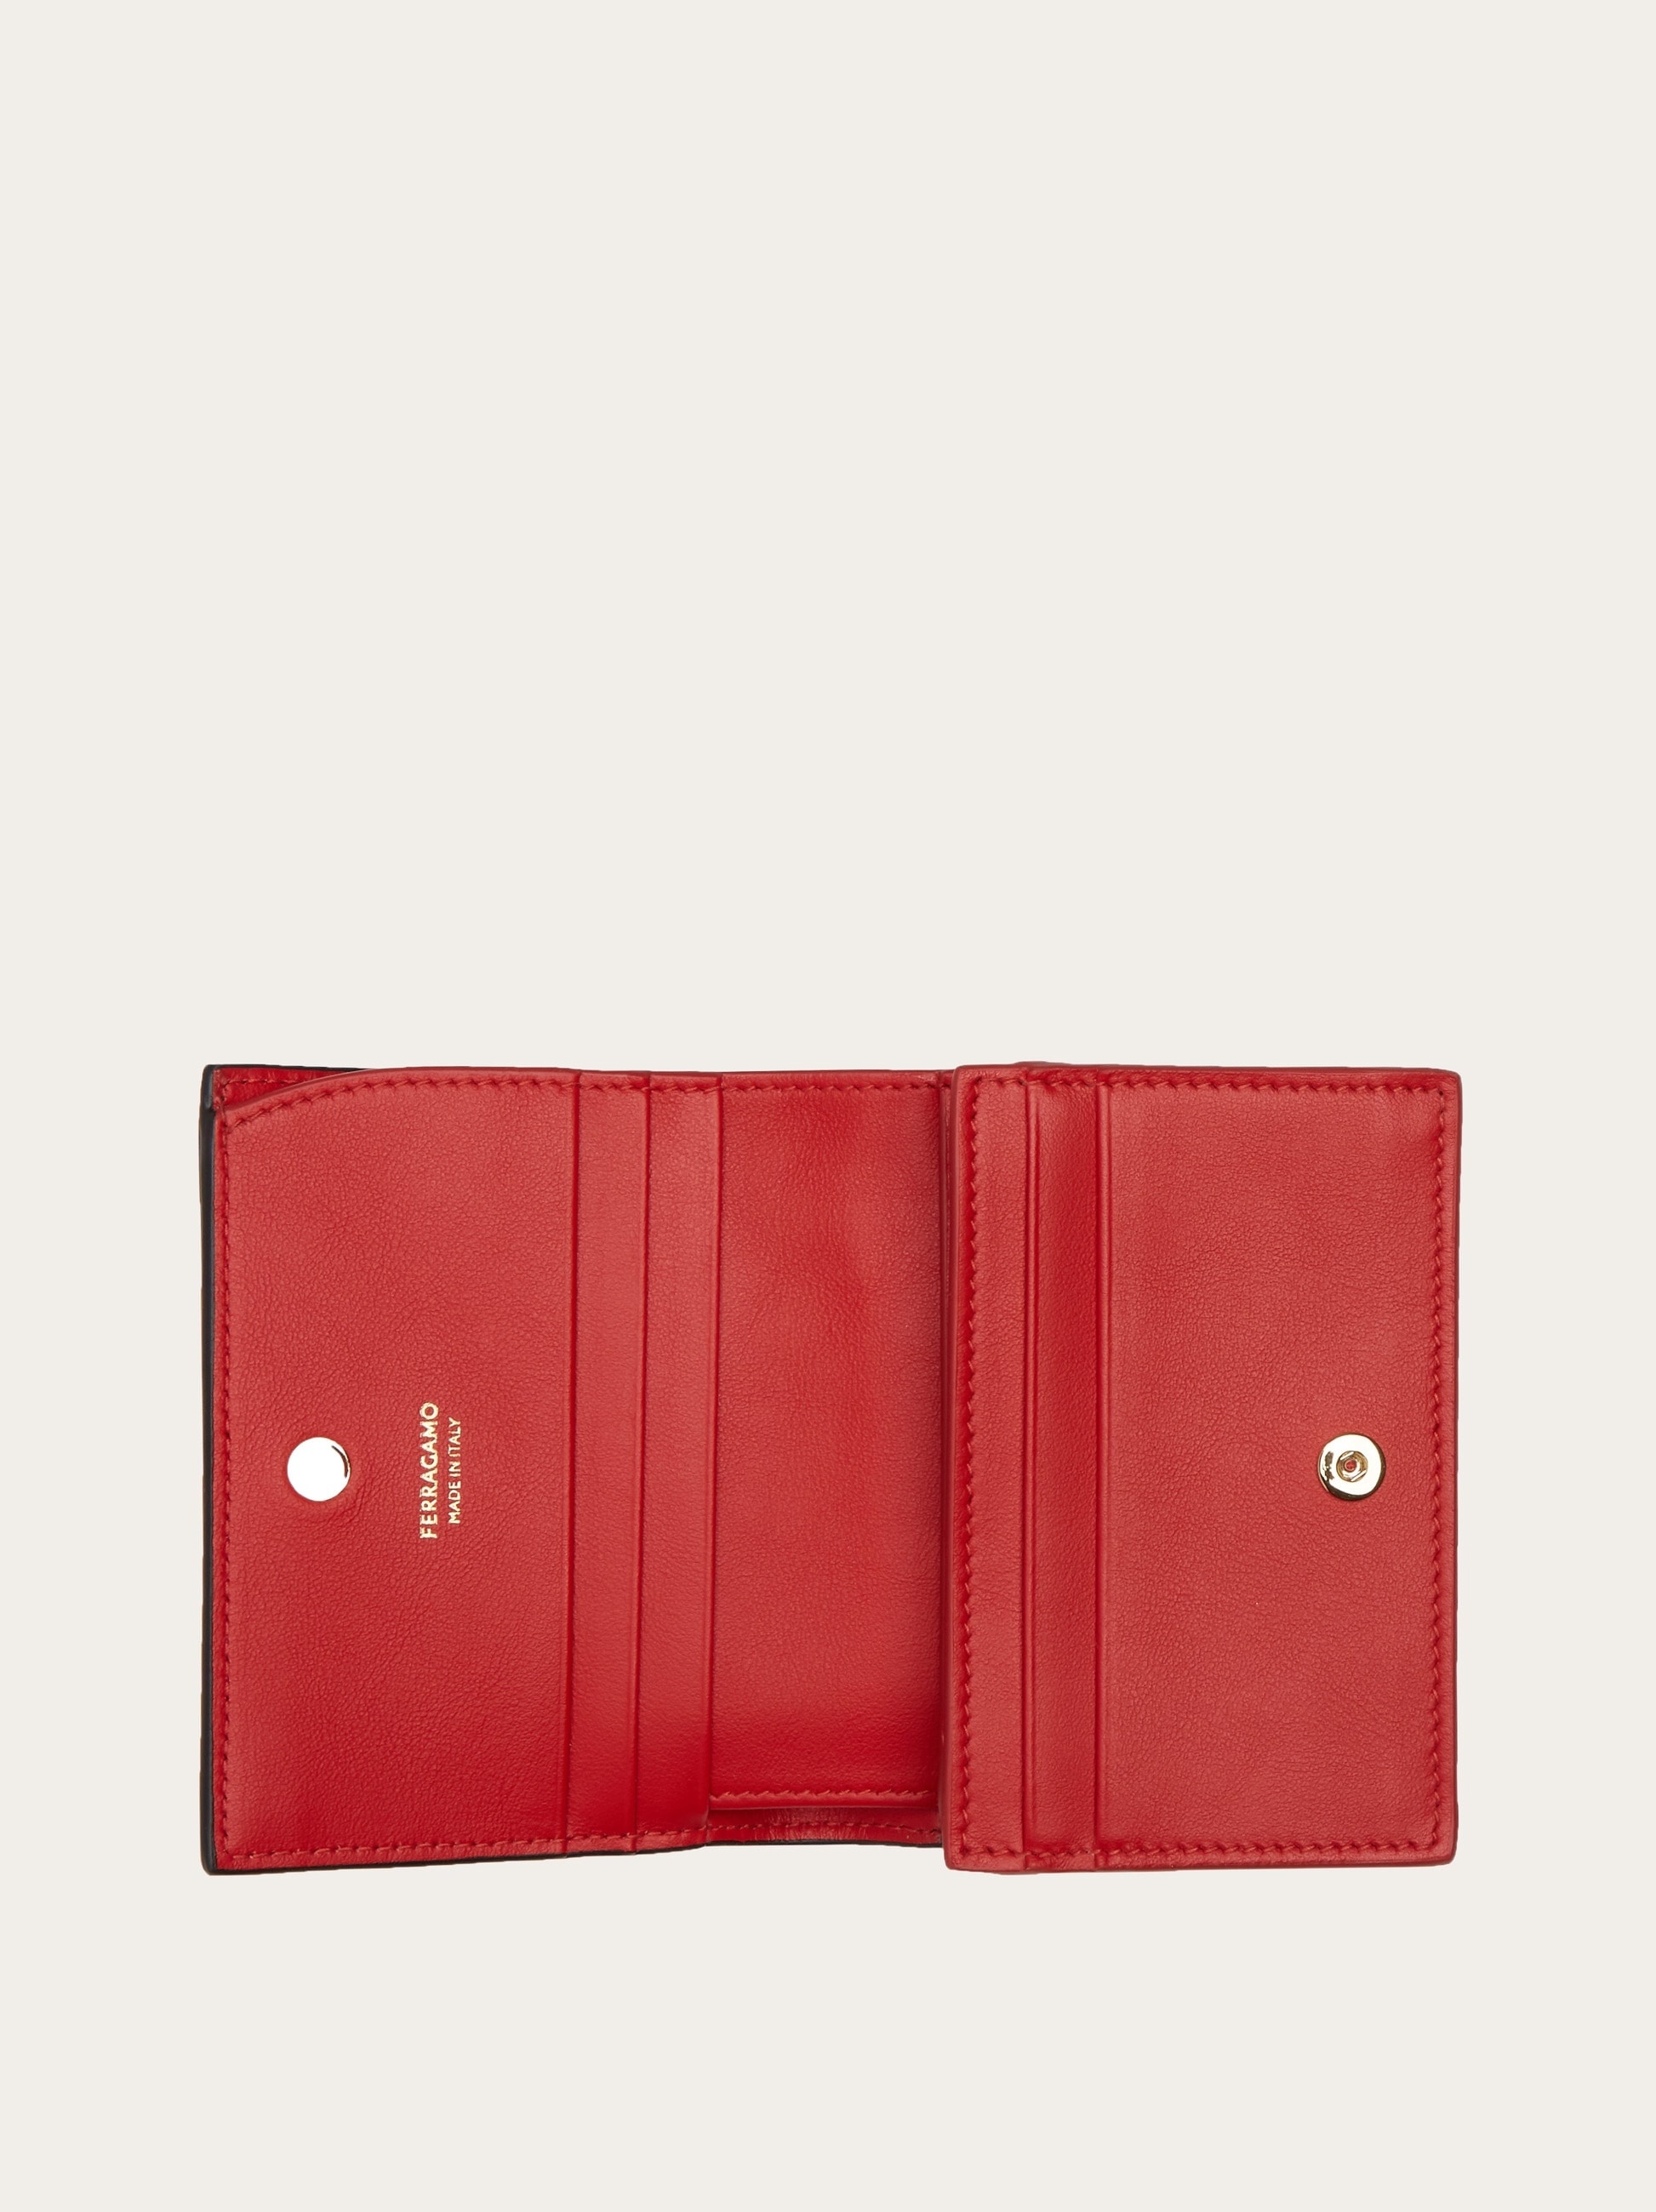 Gancini compact wallet - 4